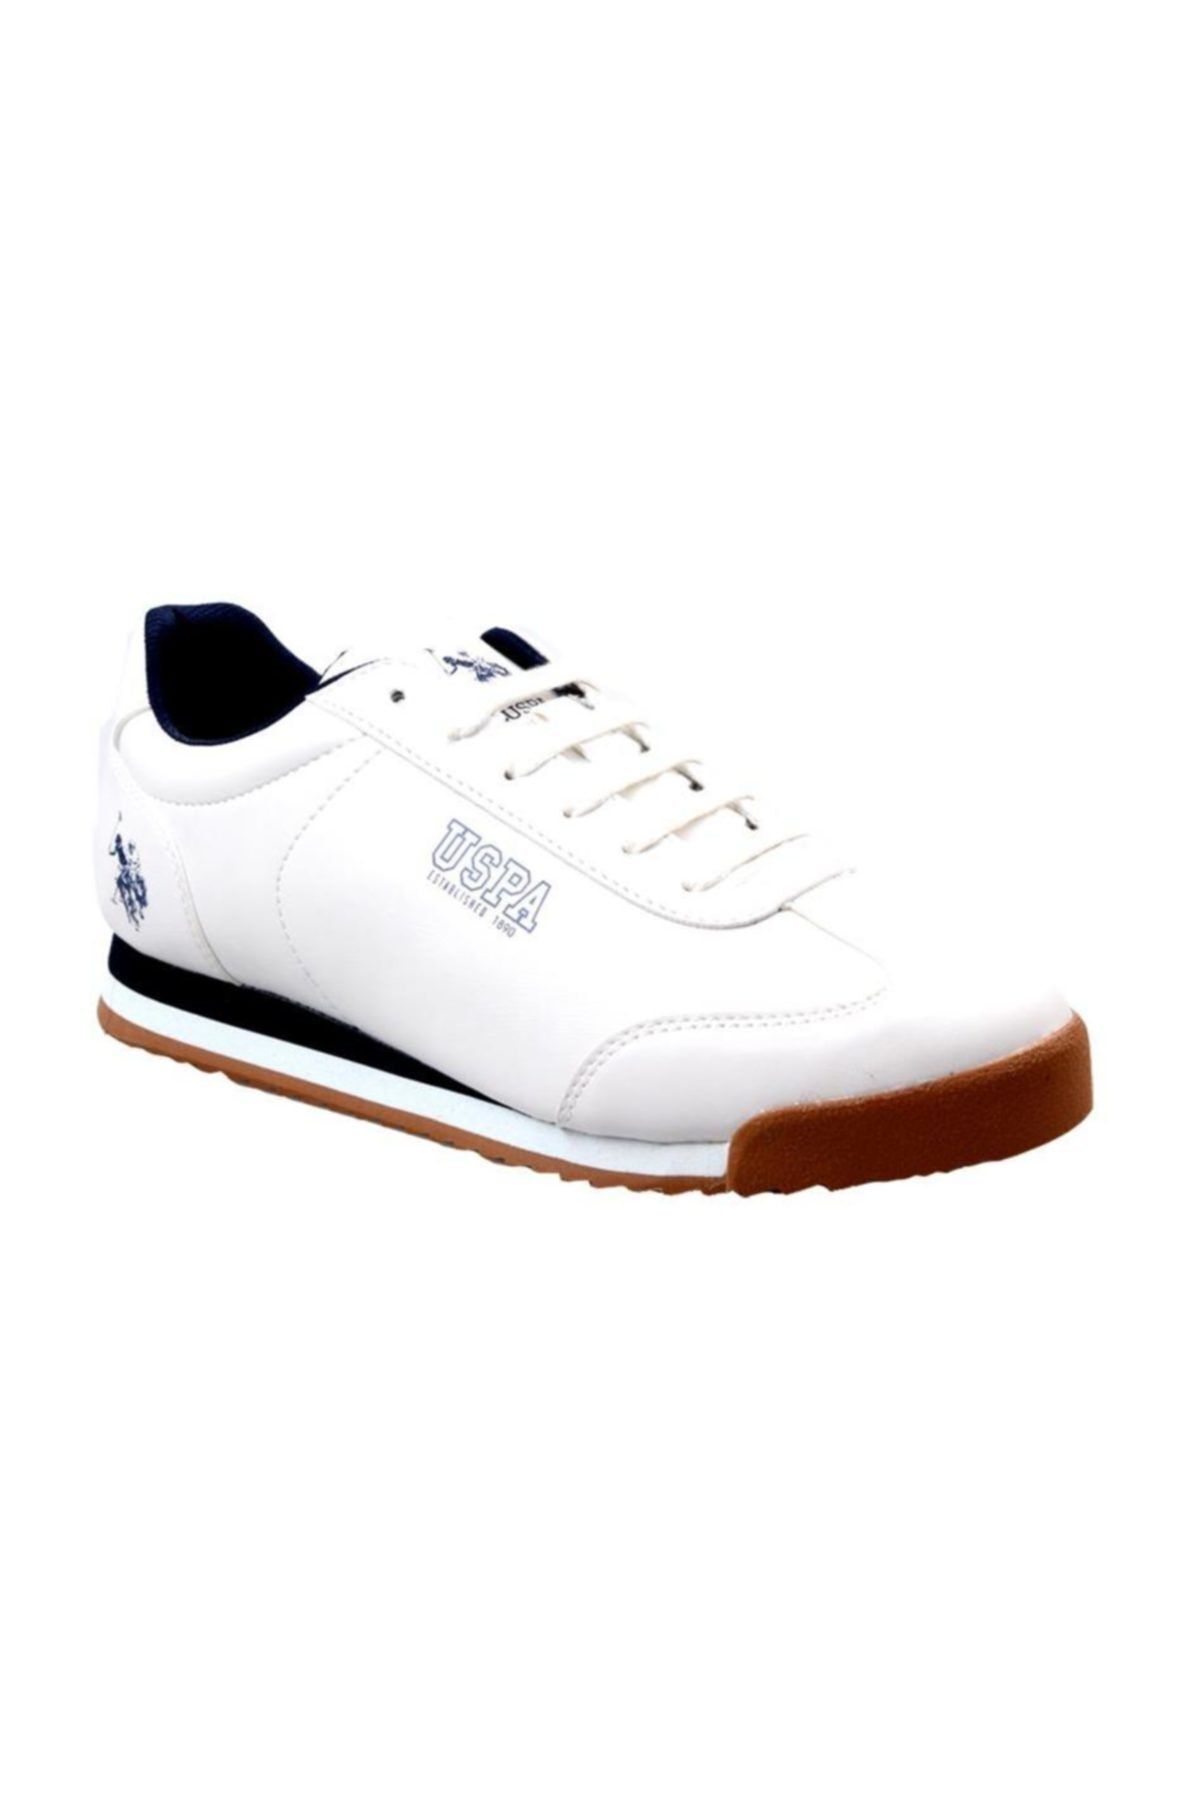 U.S. Polo Assn. Deep Beyaz Erkek Sneaker Ayakkabı 100333155